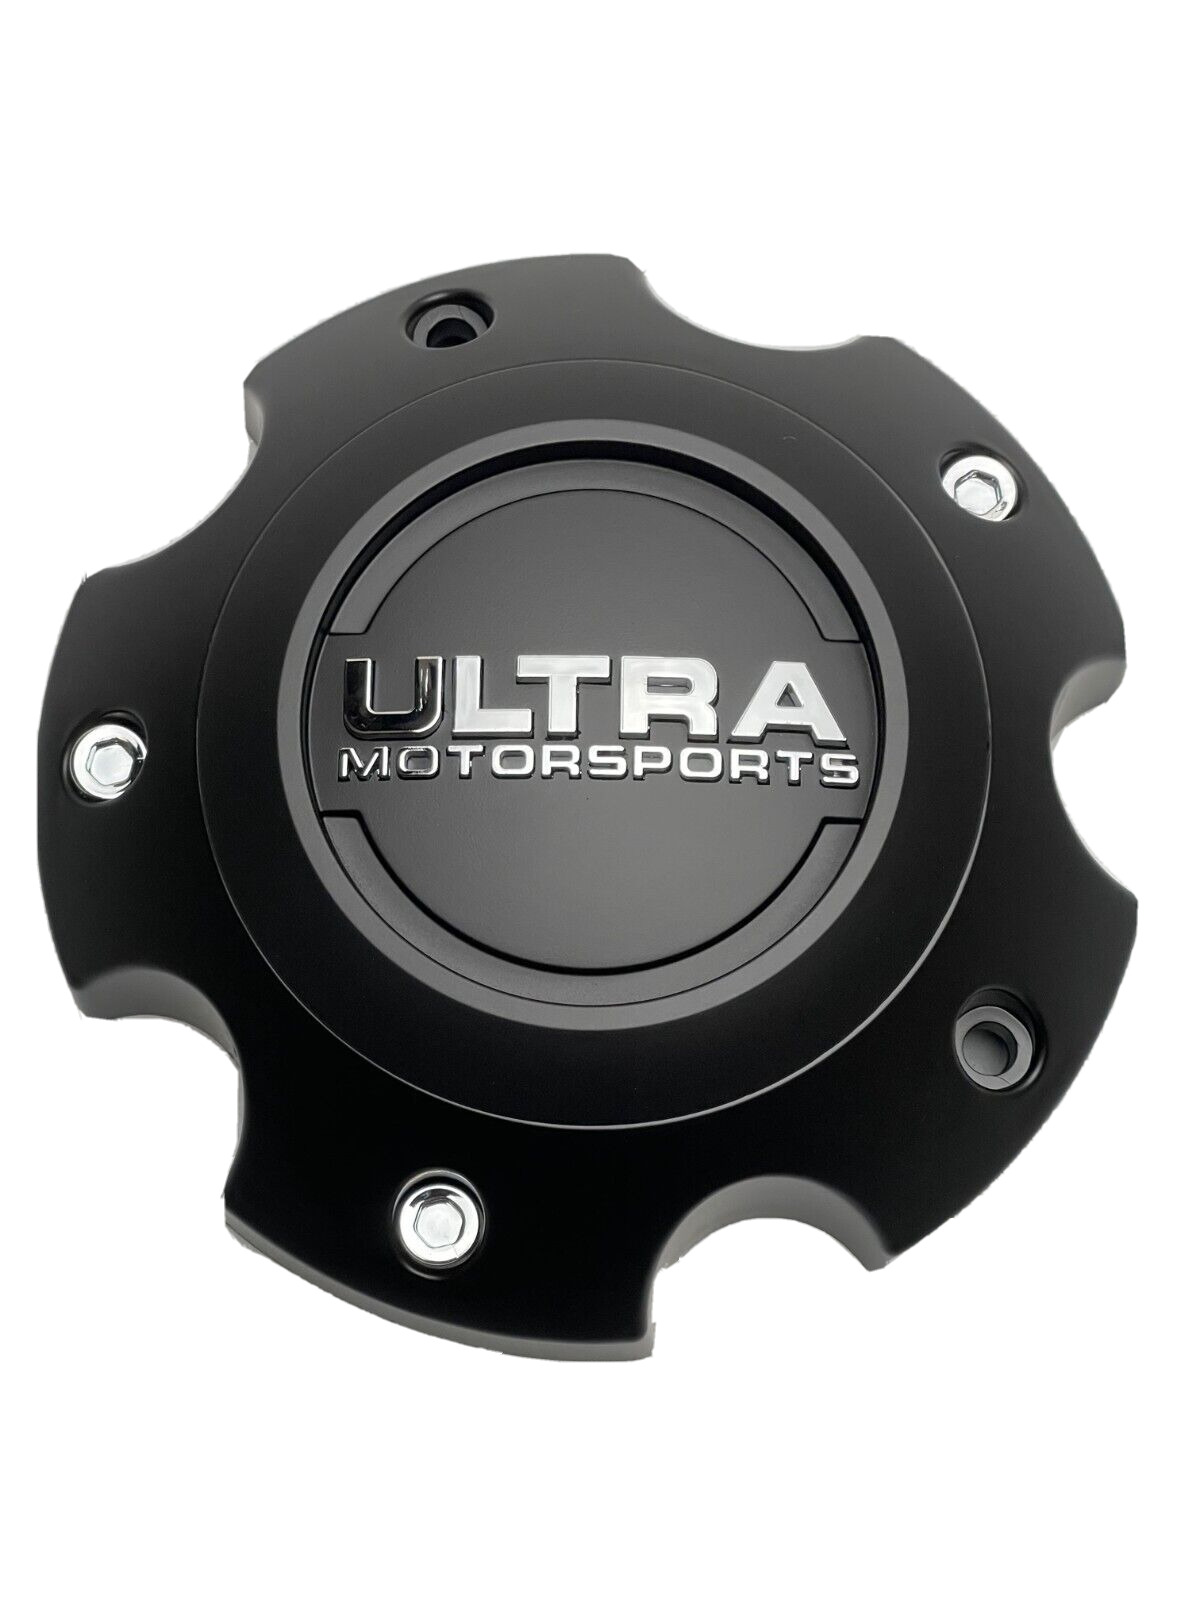 Ultra Motorsports Matte Black Wheel Center Cap 89-9750 C812201